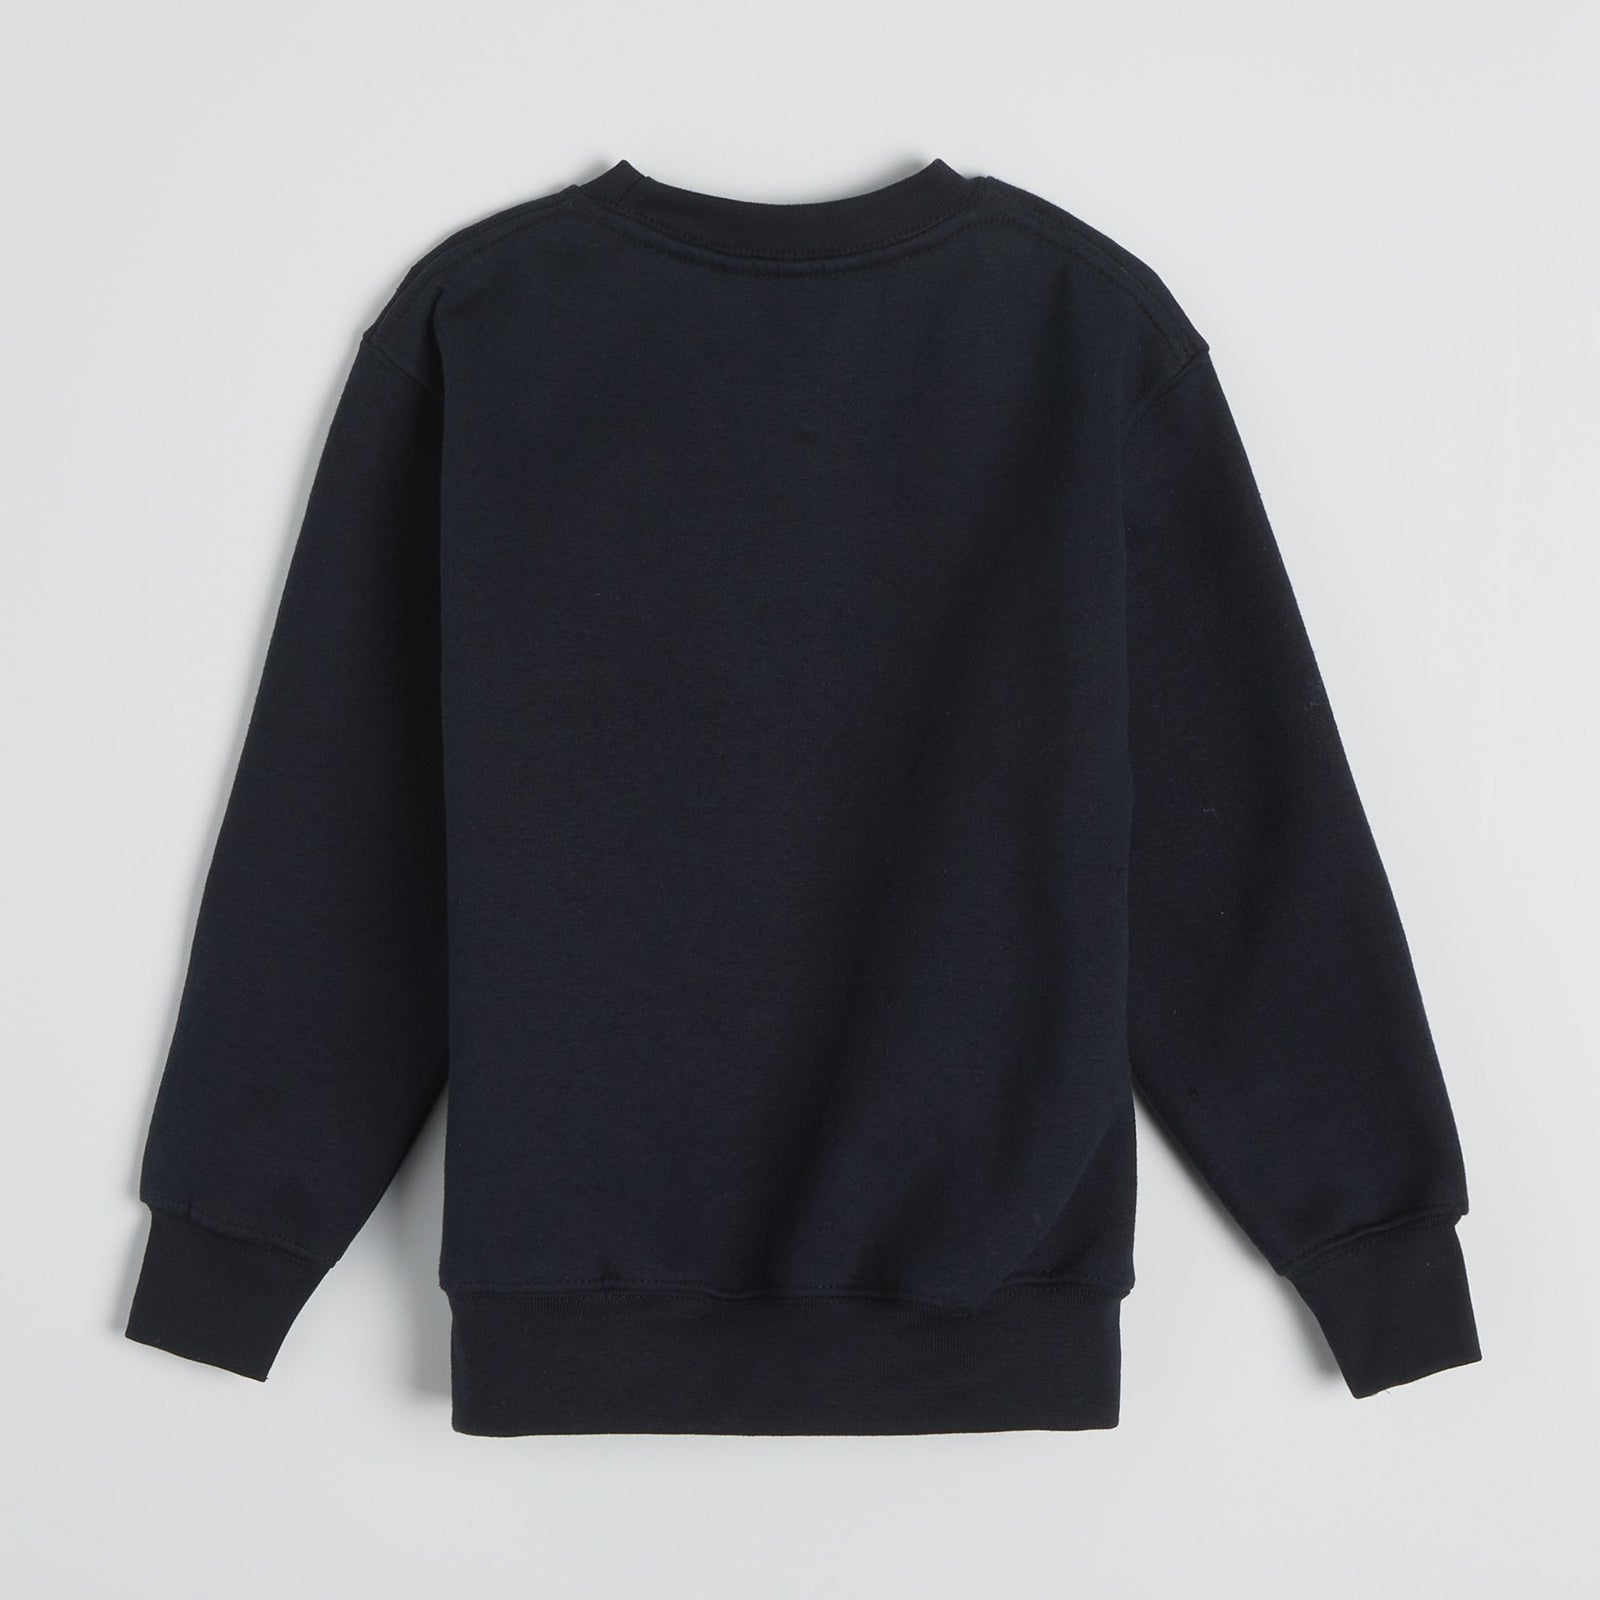 Alphabet Black Sweater